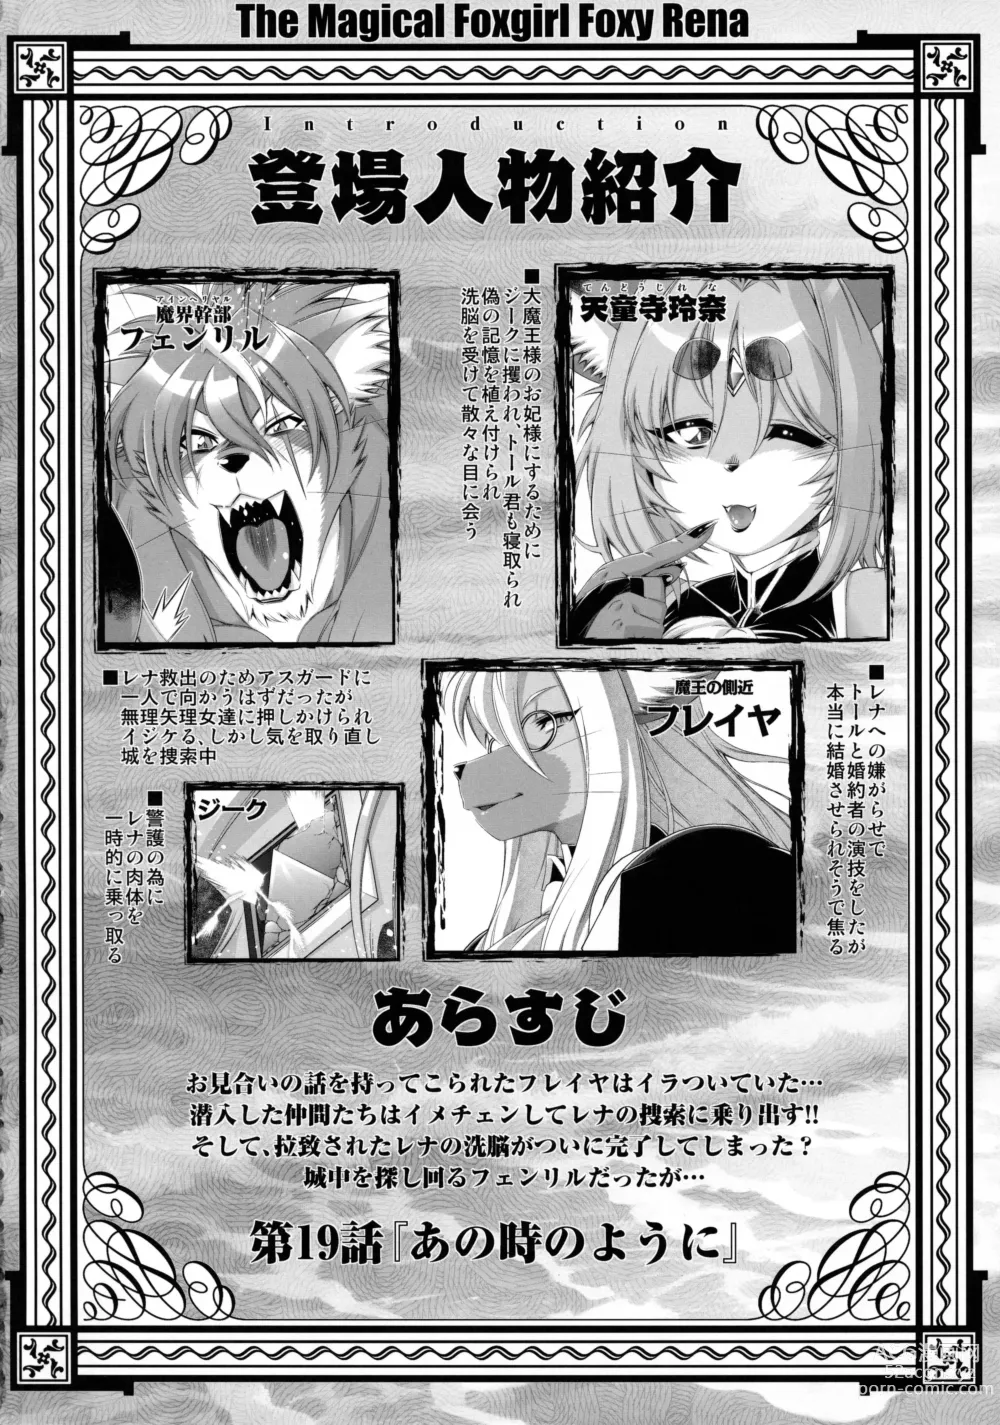 Page 3 of doujinshi Mahou no Juujin Foxy Rena 19